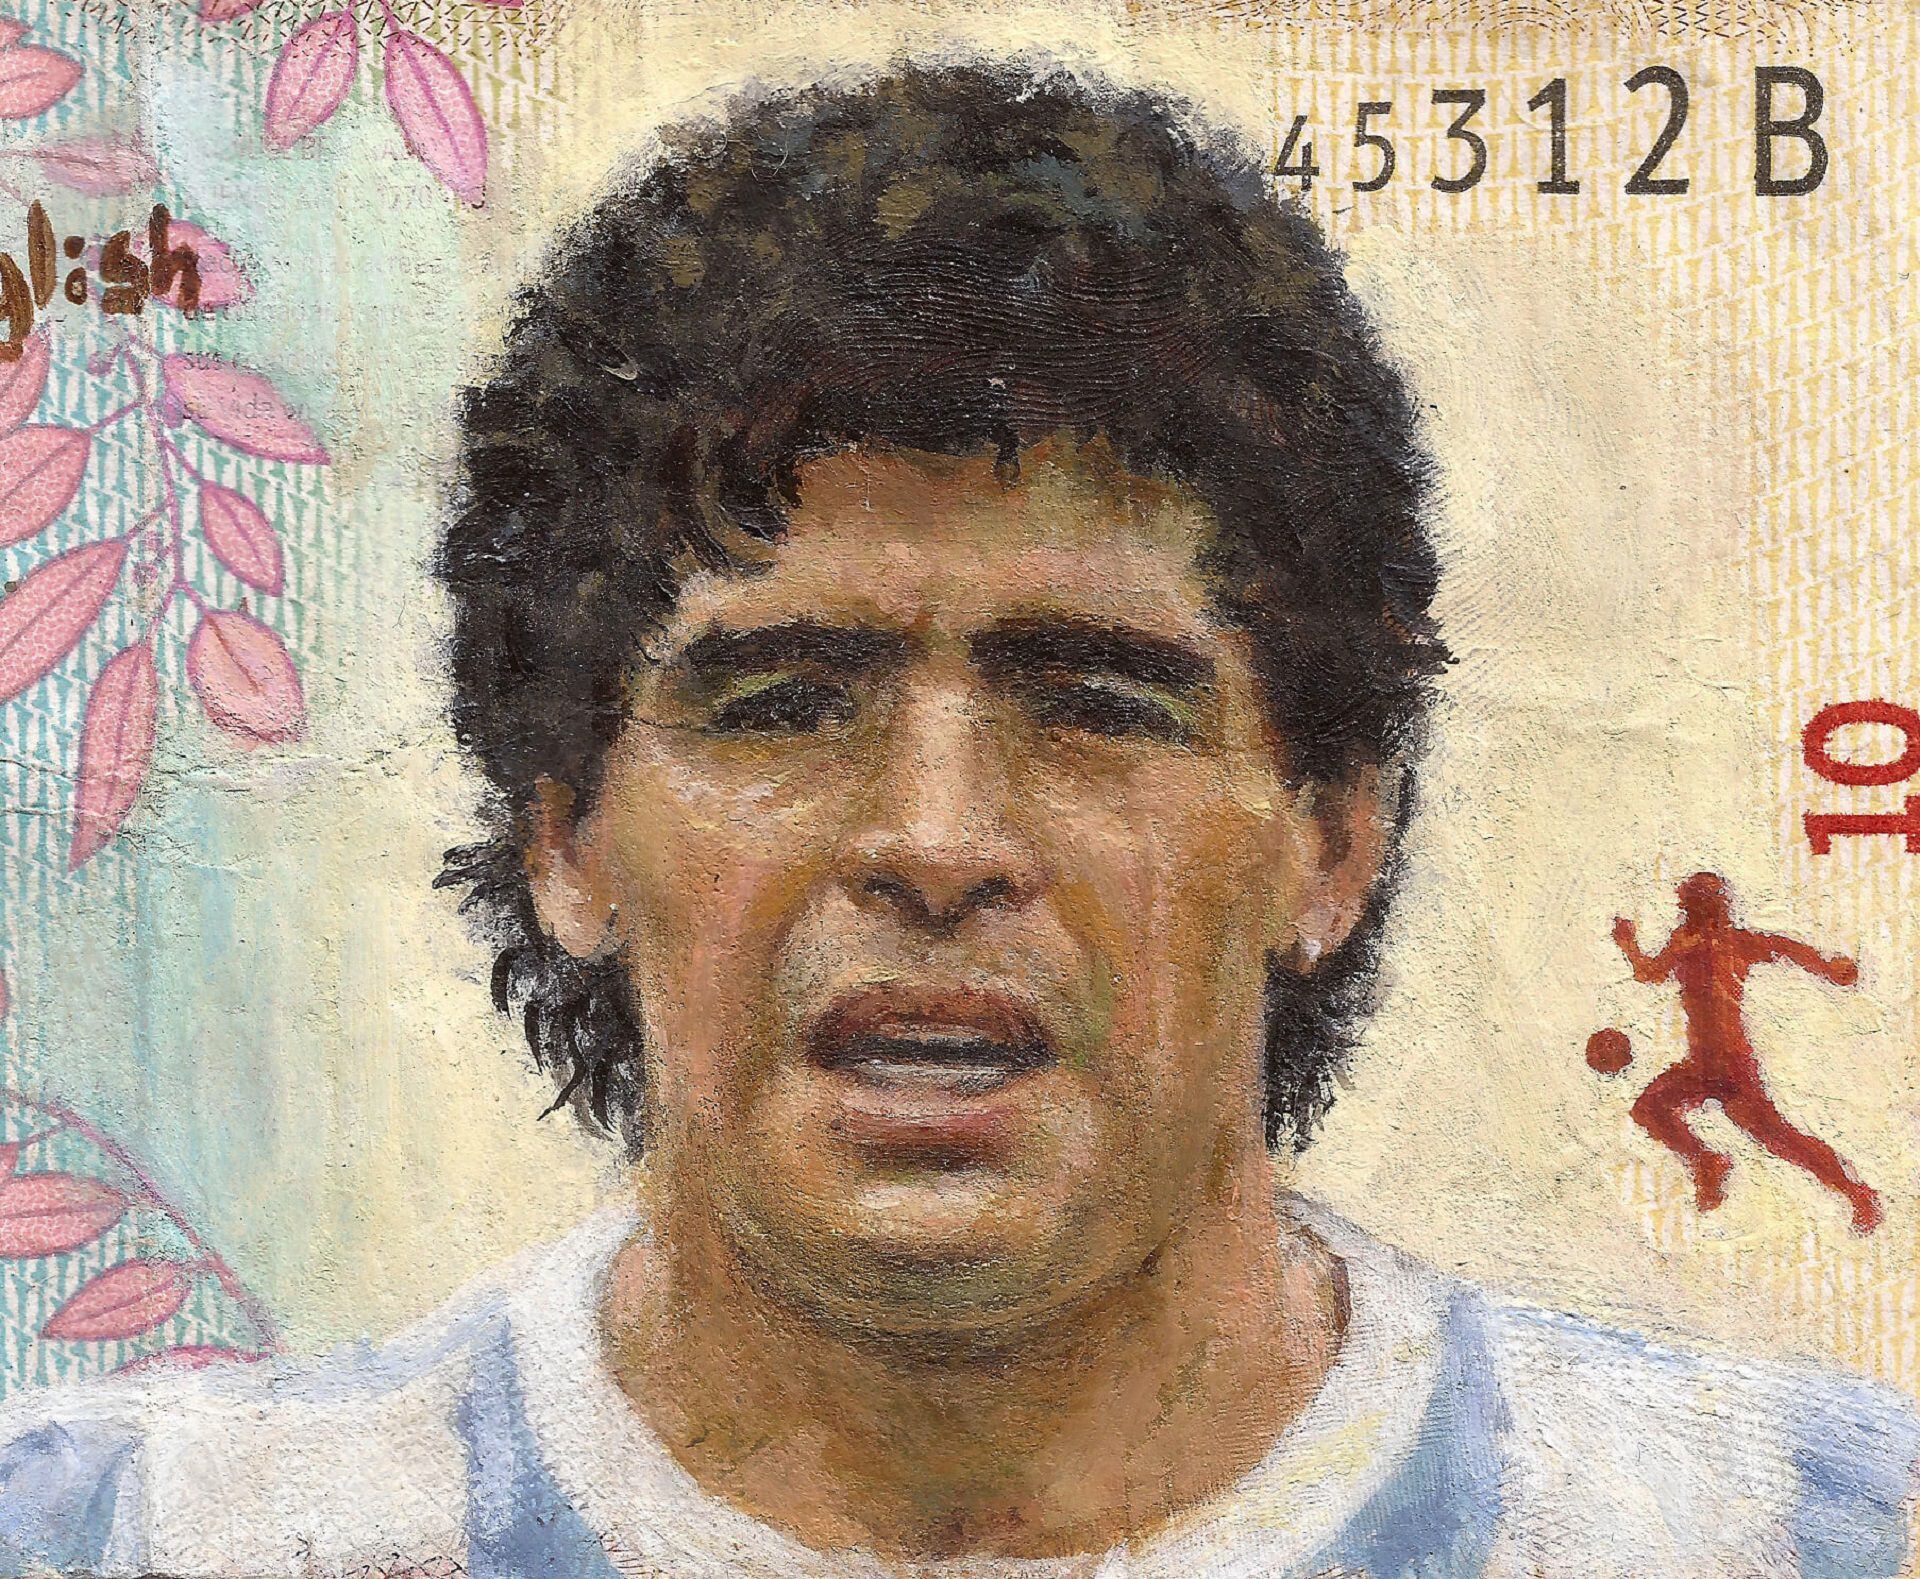 Detalle de un billete de Maradona